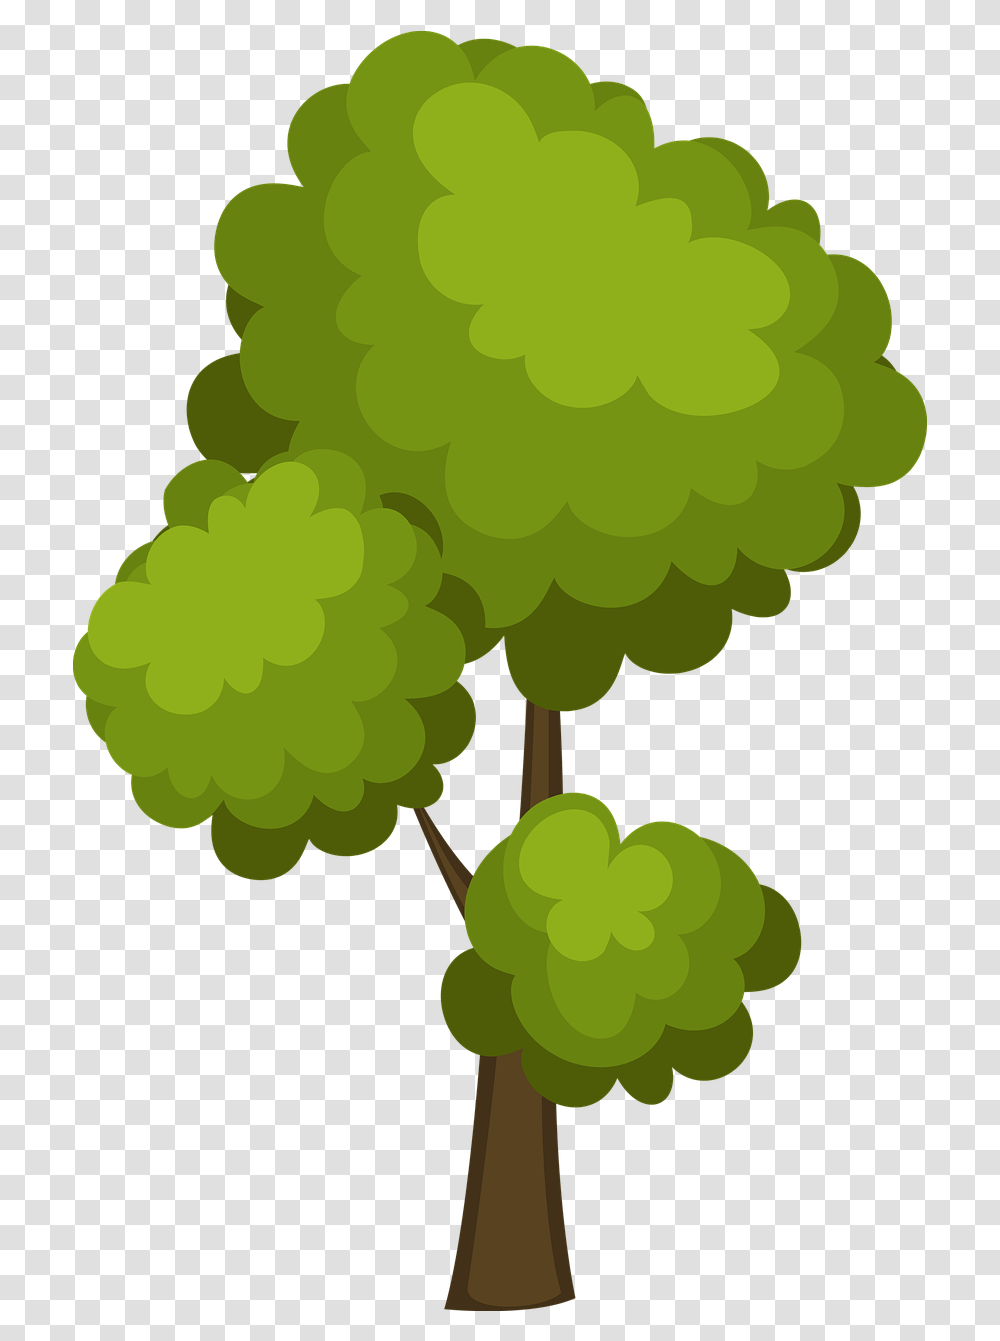 Tree Cartoon Icon Free Image On Pixabay Tree Icon, Grapes, Fruit, Plant, Food Transparent Png